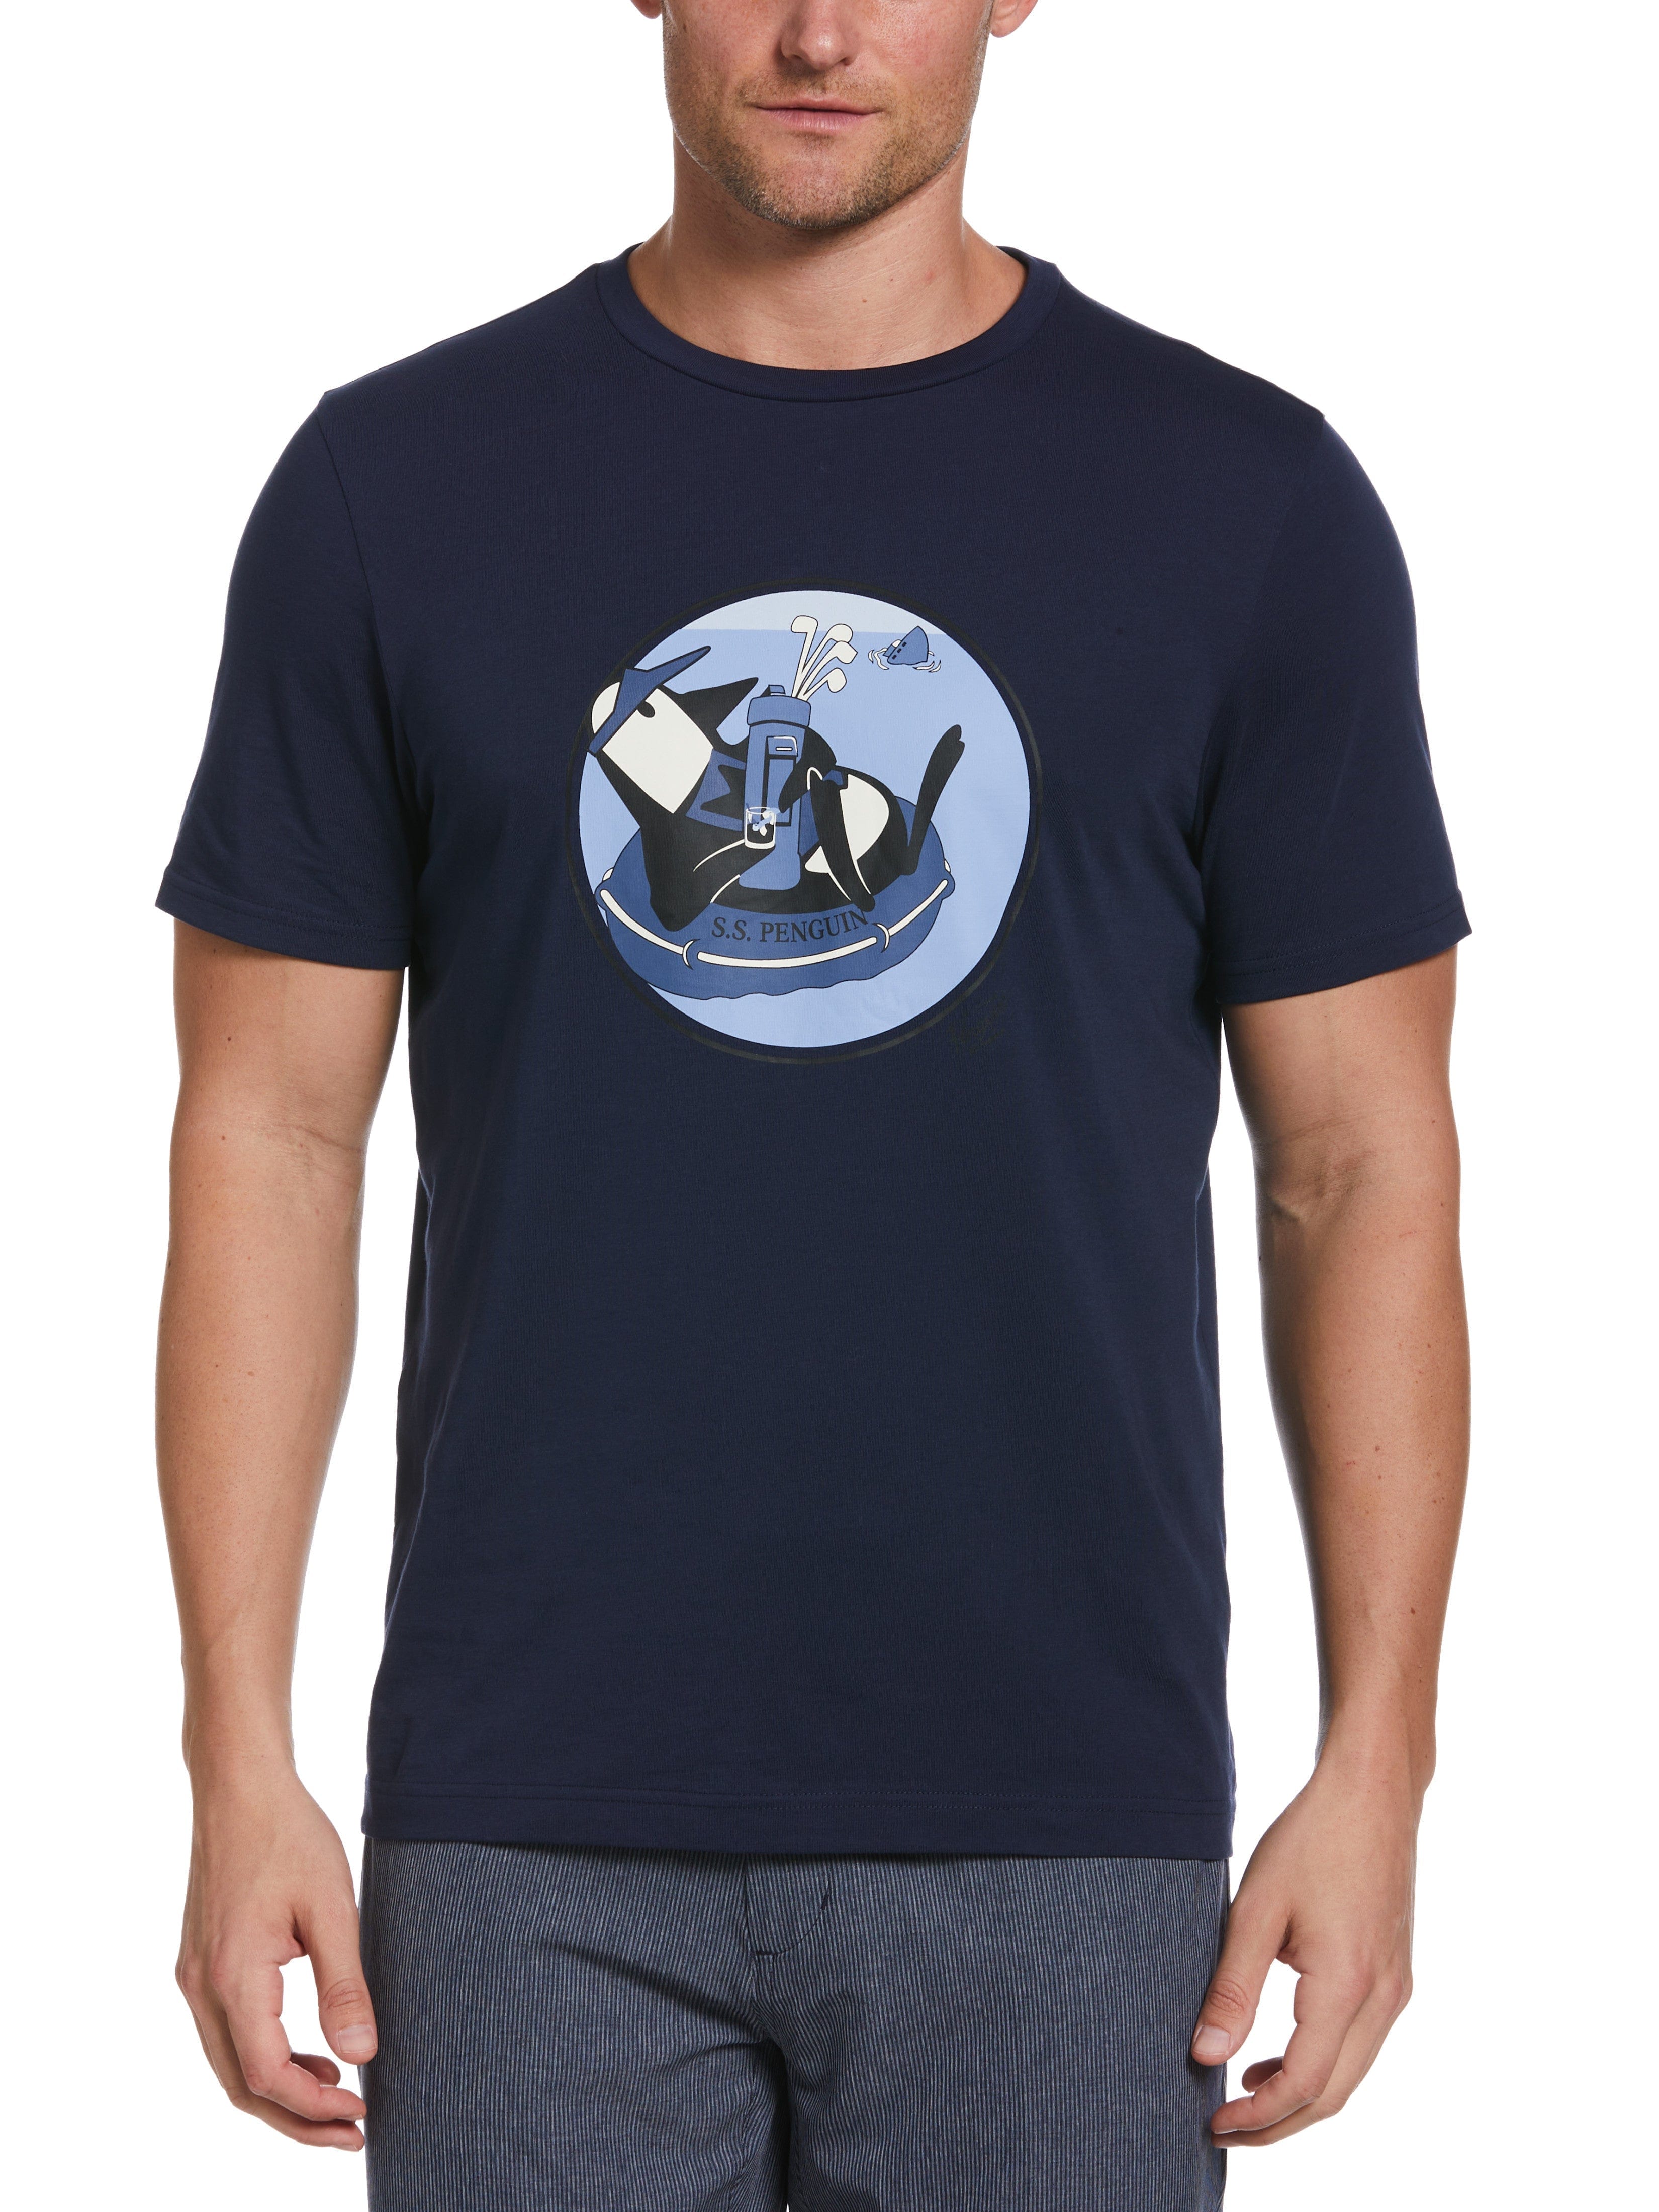 Original Penguin Mens Shipwreck Pete Graphic Golf T-Shirt, Size XL, Dark Navy Blue, 100% Cotton | Golf Apparel Shop